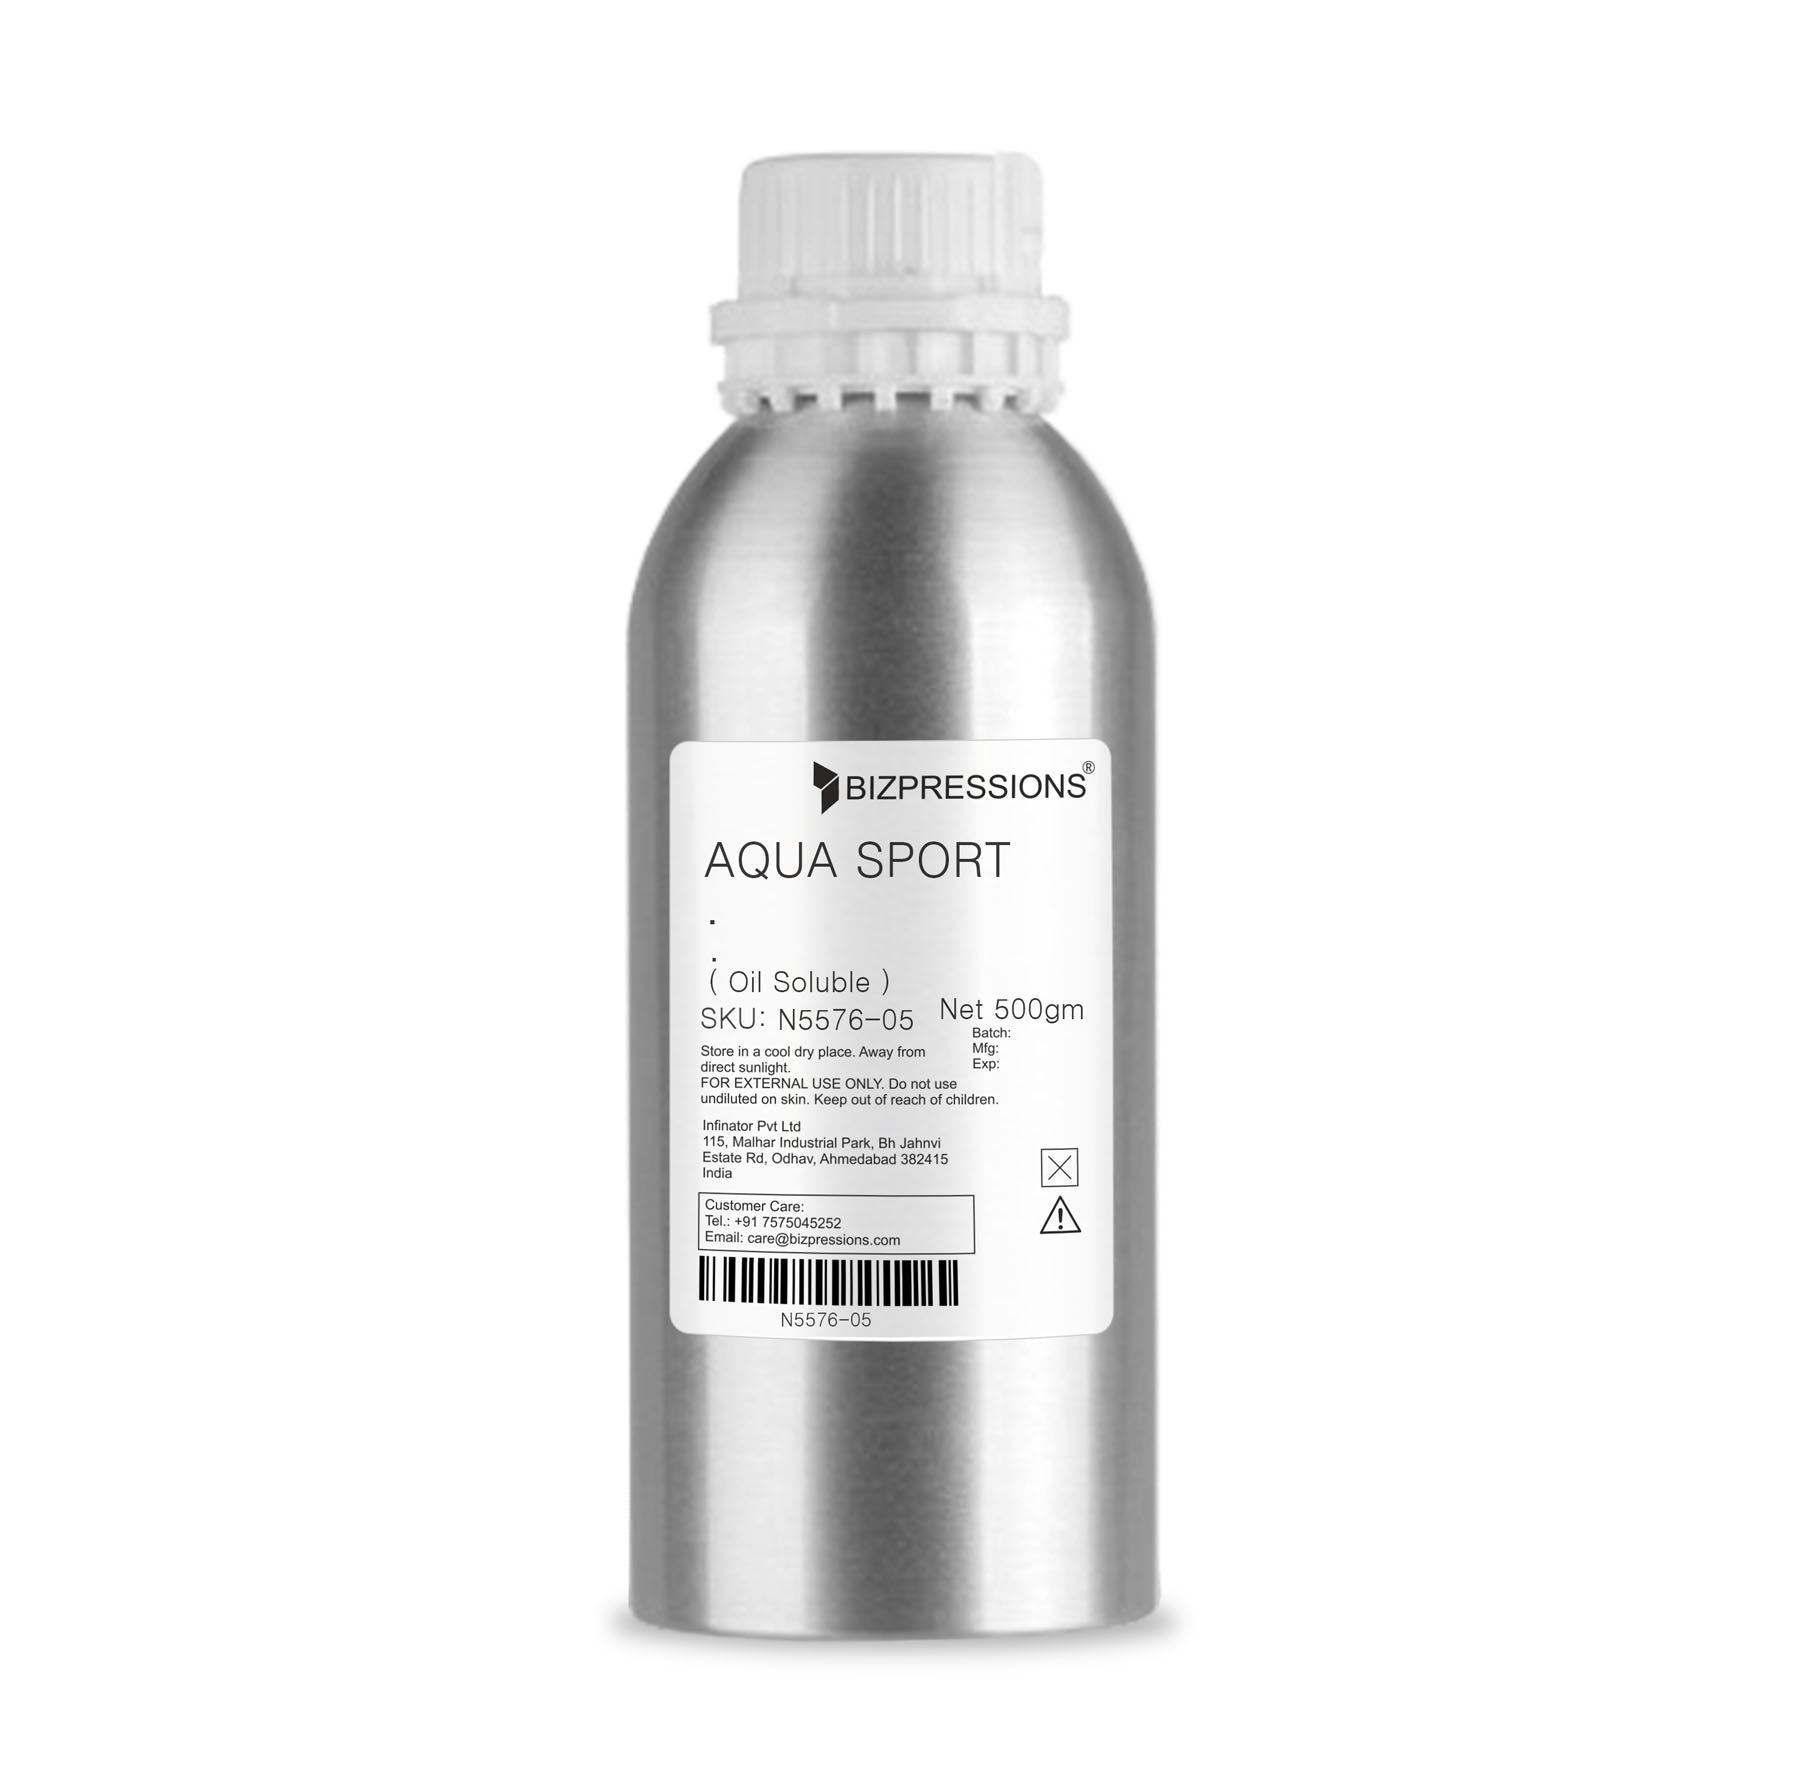 AQUA SPORT - Fragrance ( Oil Soluble ) - 500 gm